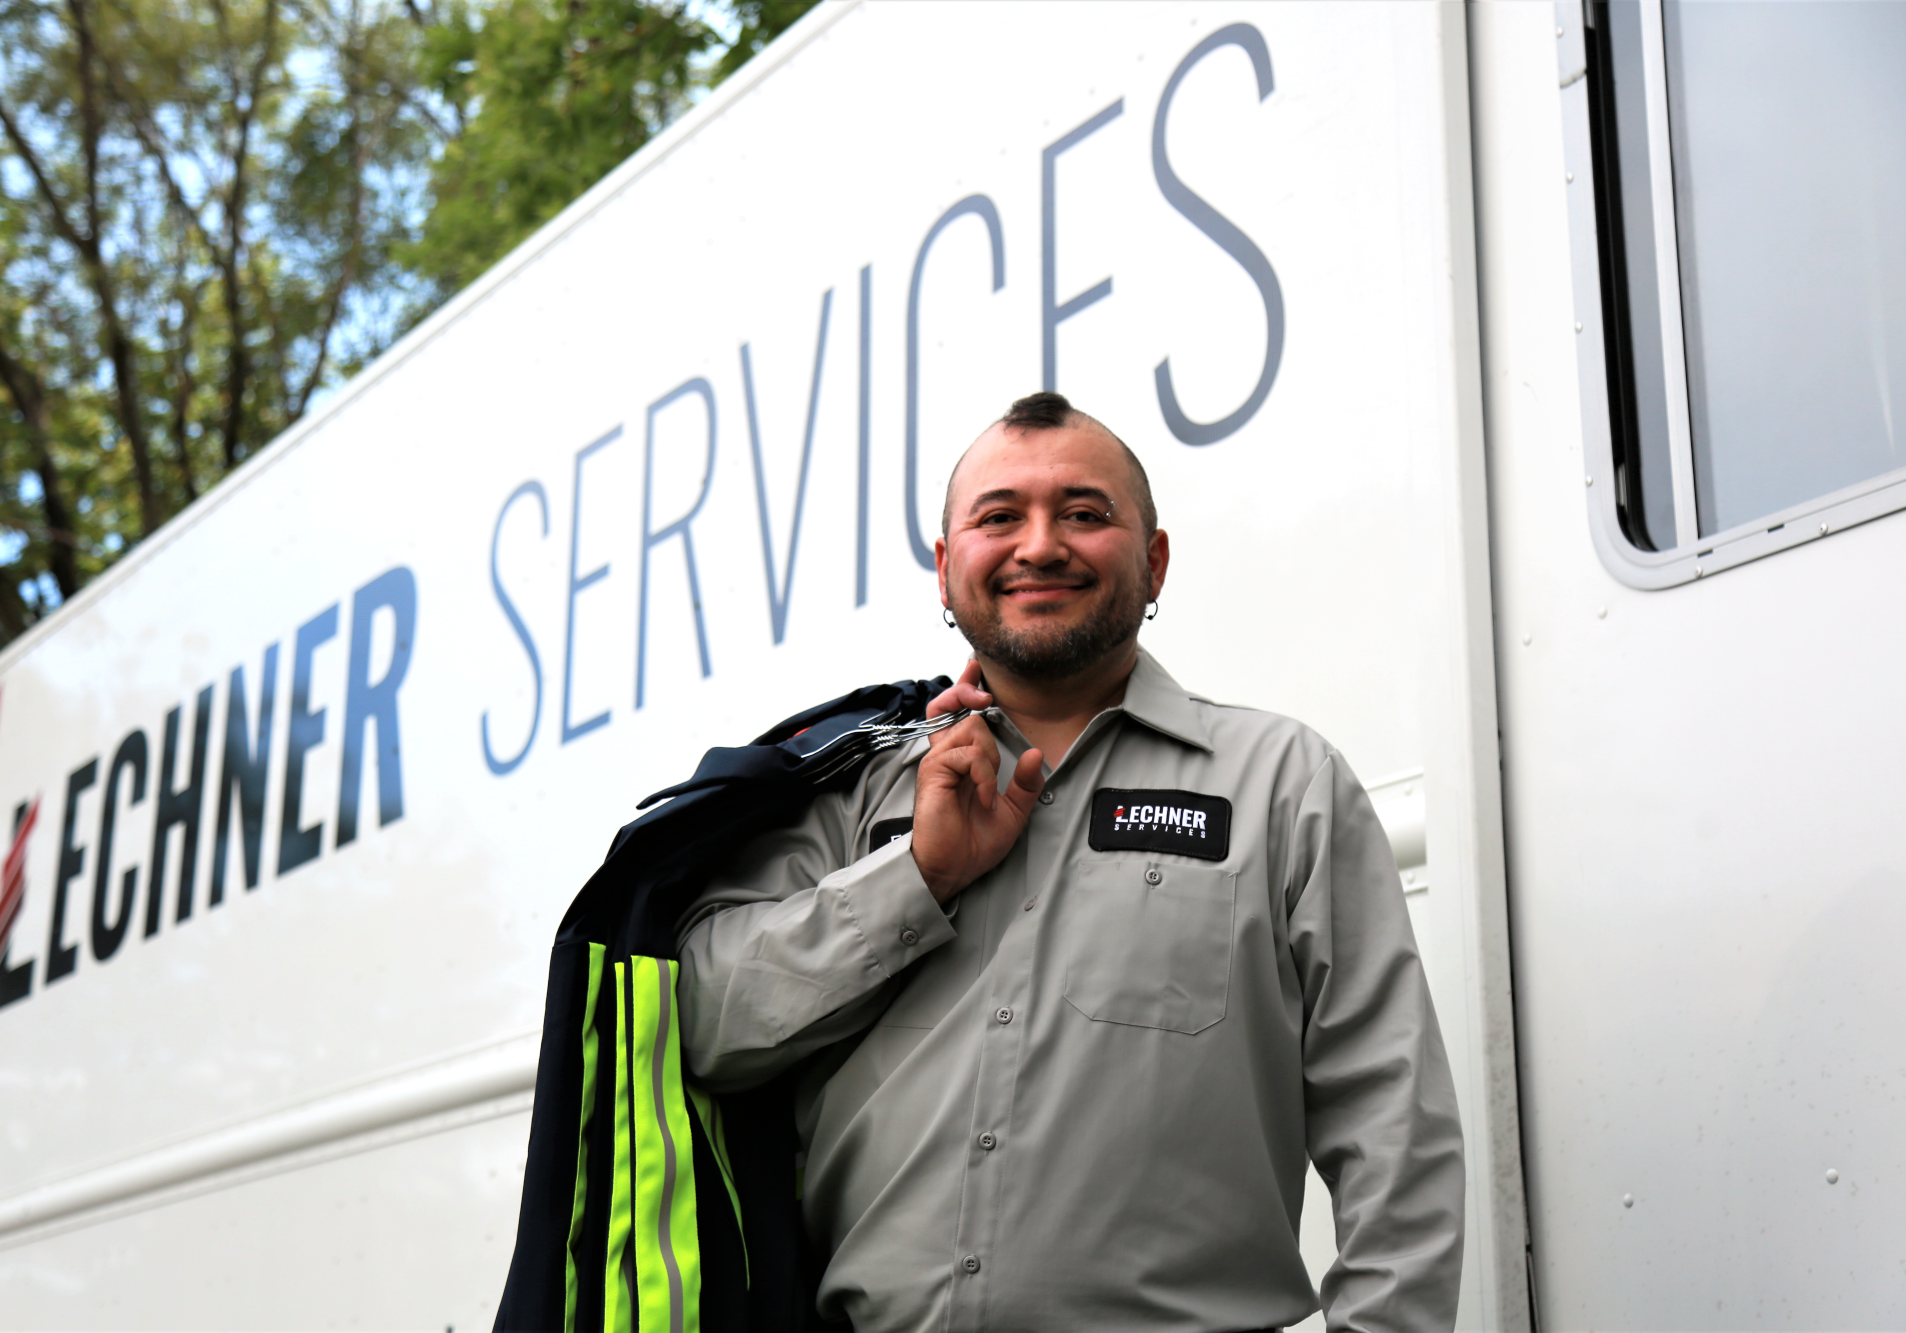 A Lechner Route Service Representative delivering enhanced visibility uniforms